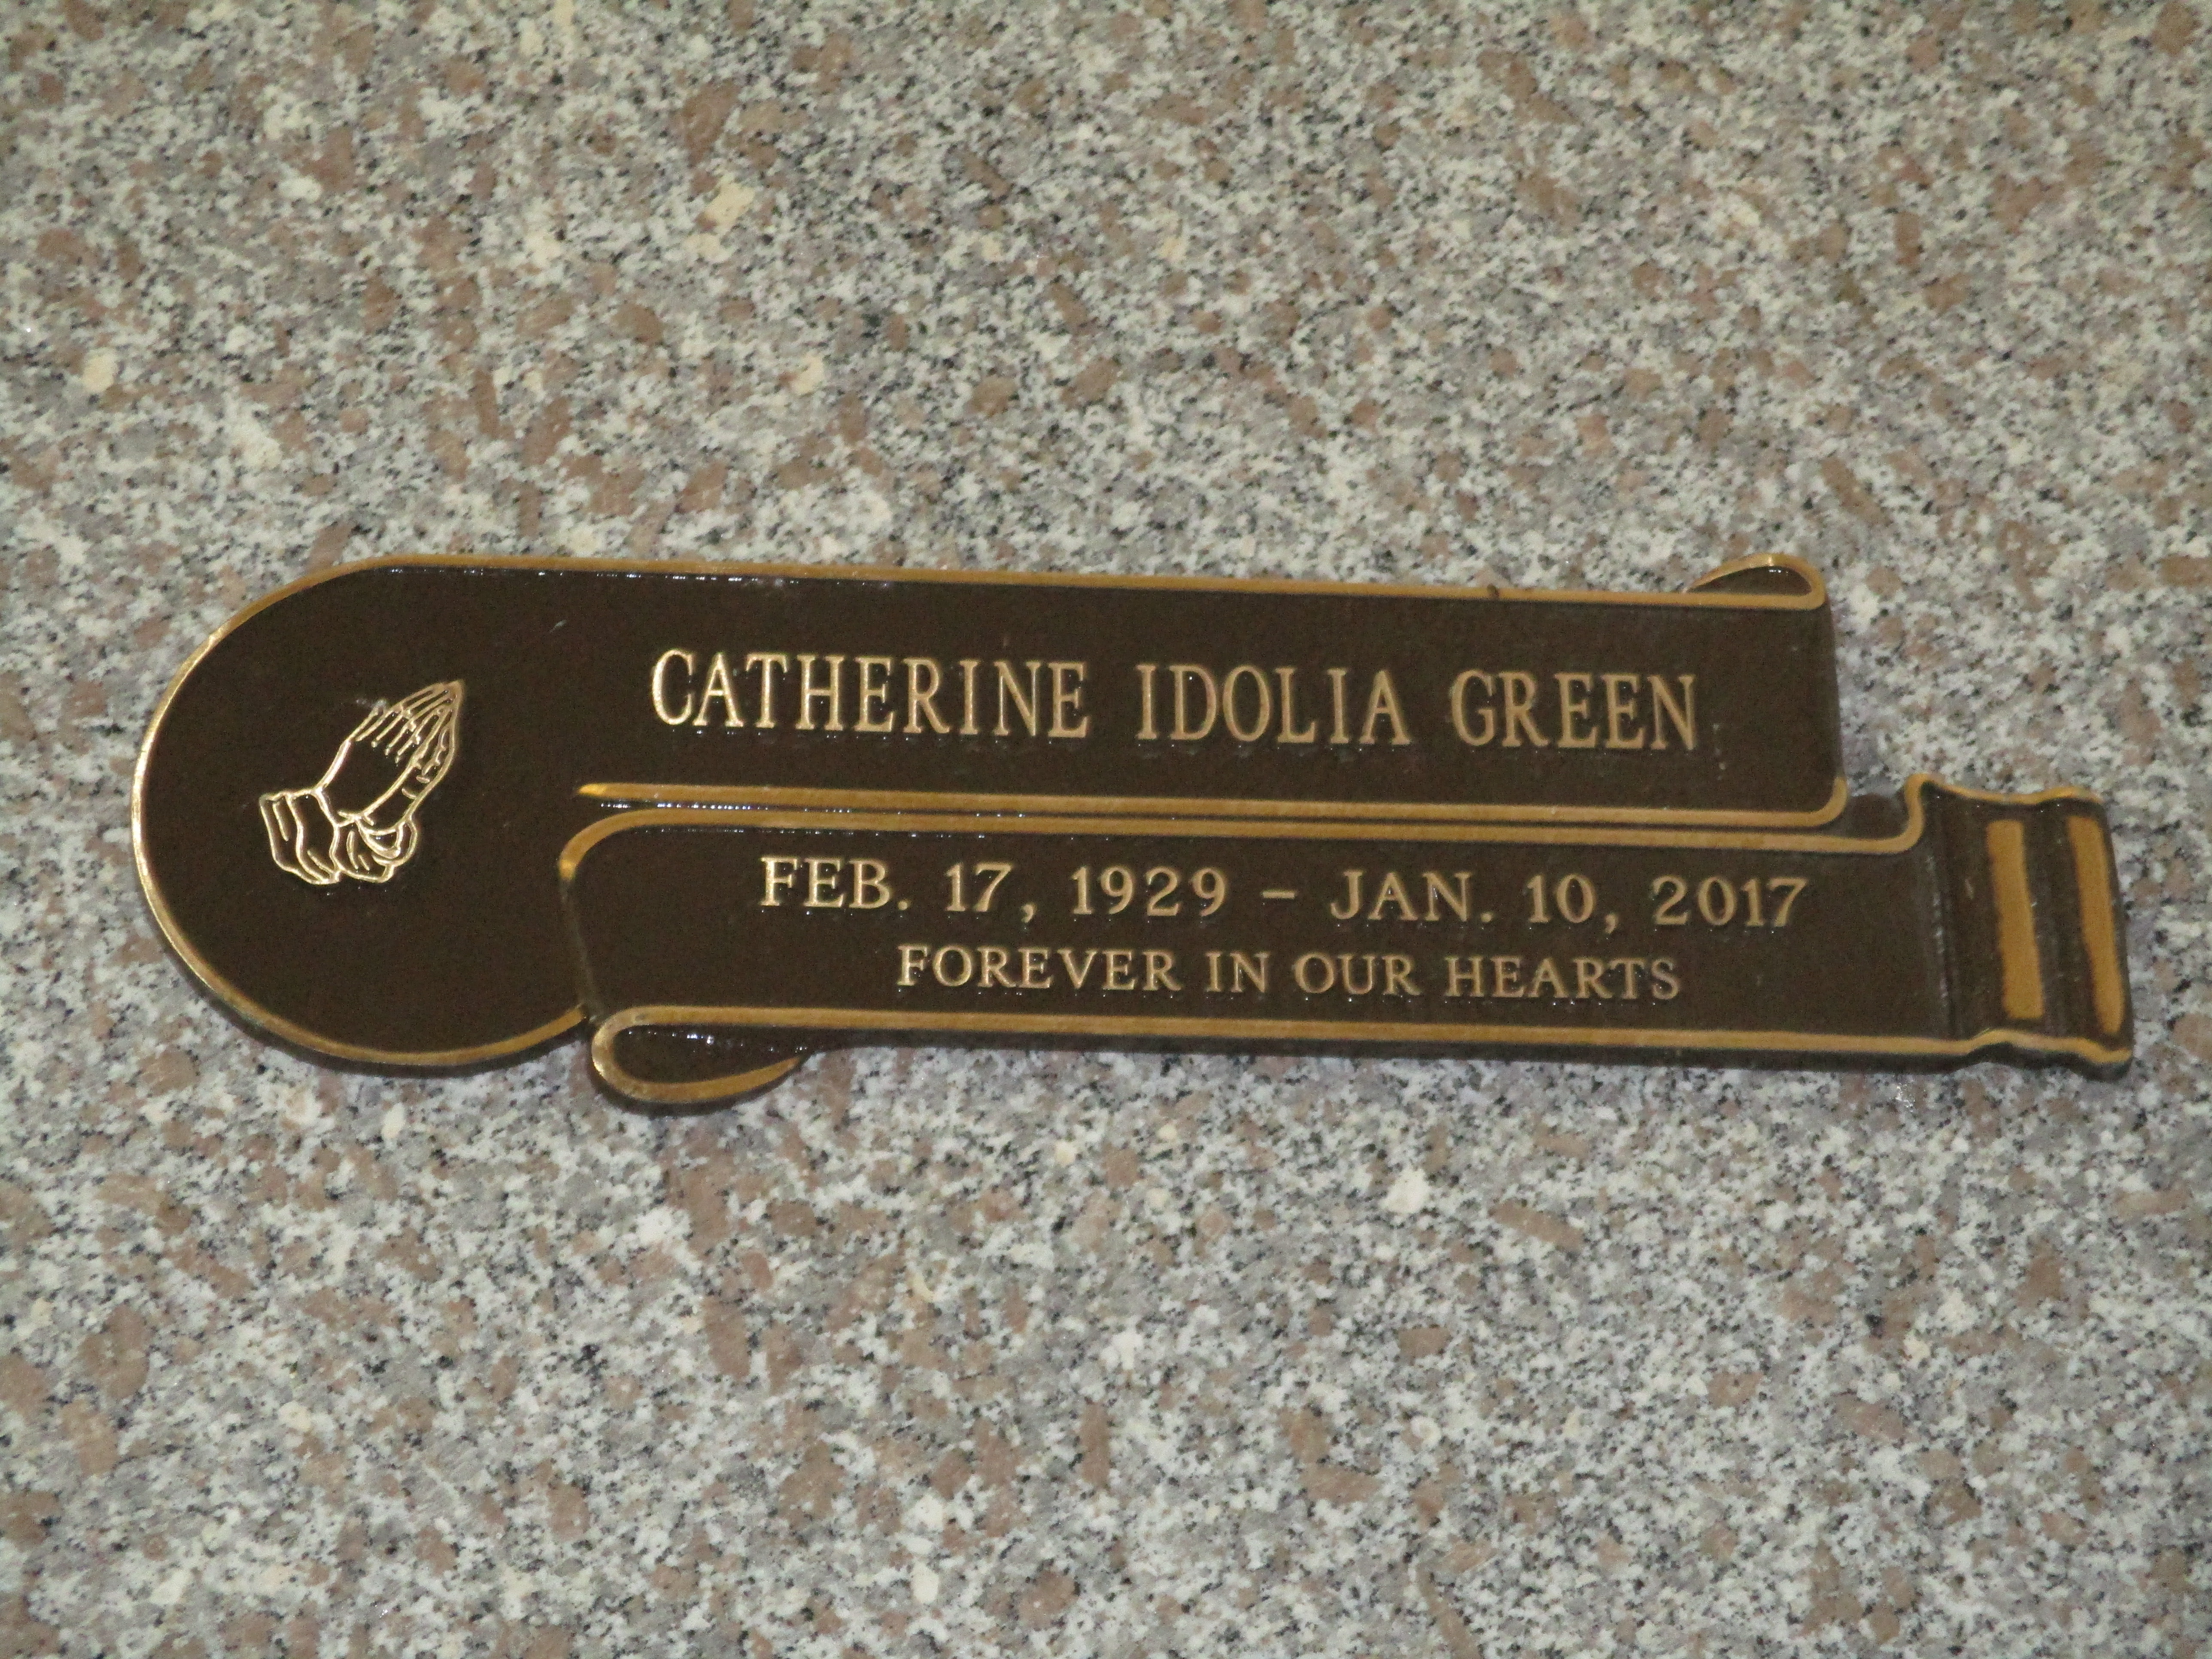 Catherine Idolia Green